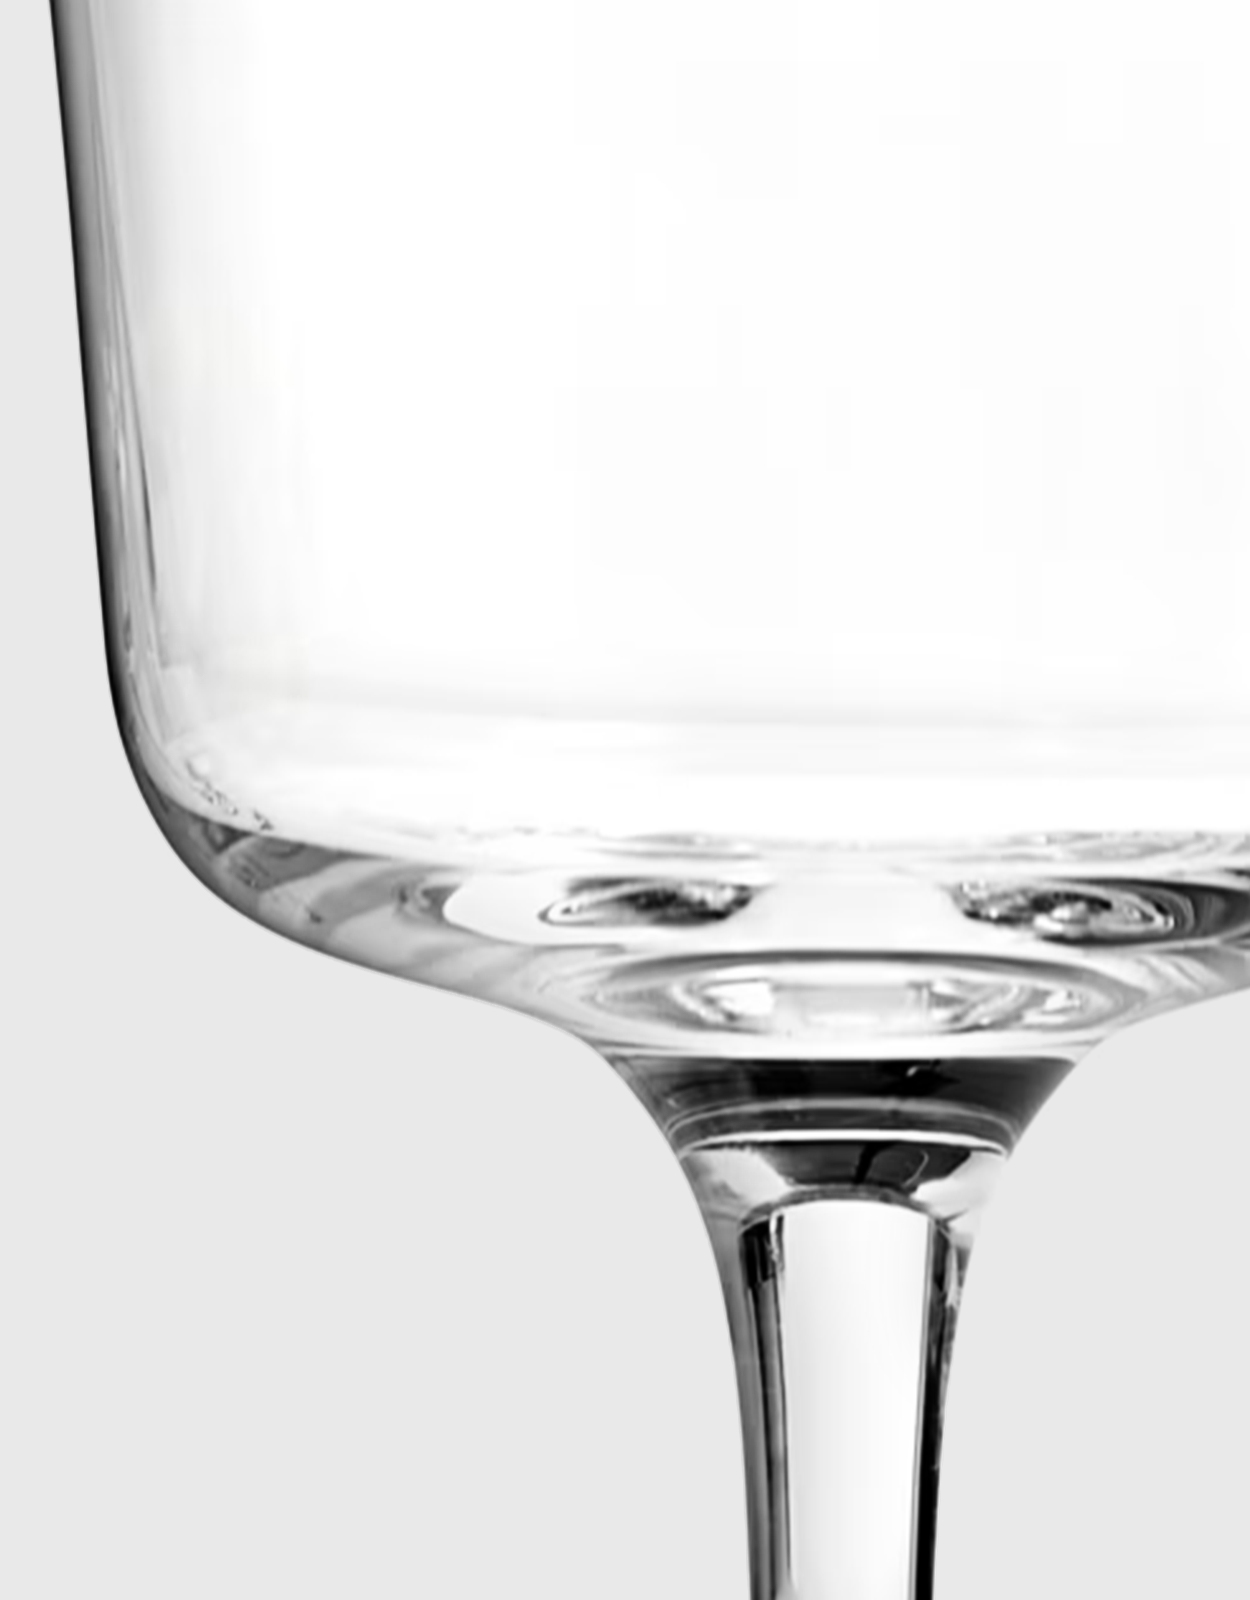 Royal Doulton 1815 Highball Everyday Glassware, Set of 4 - Macy's